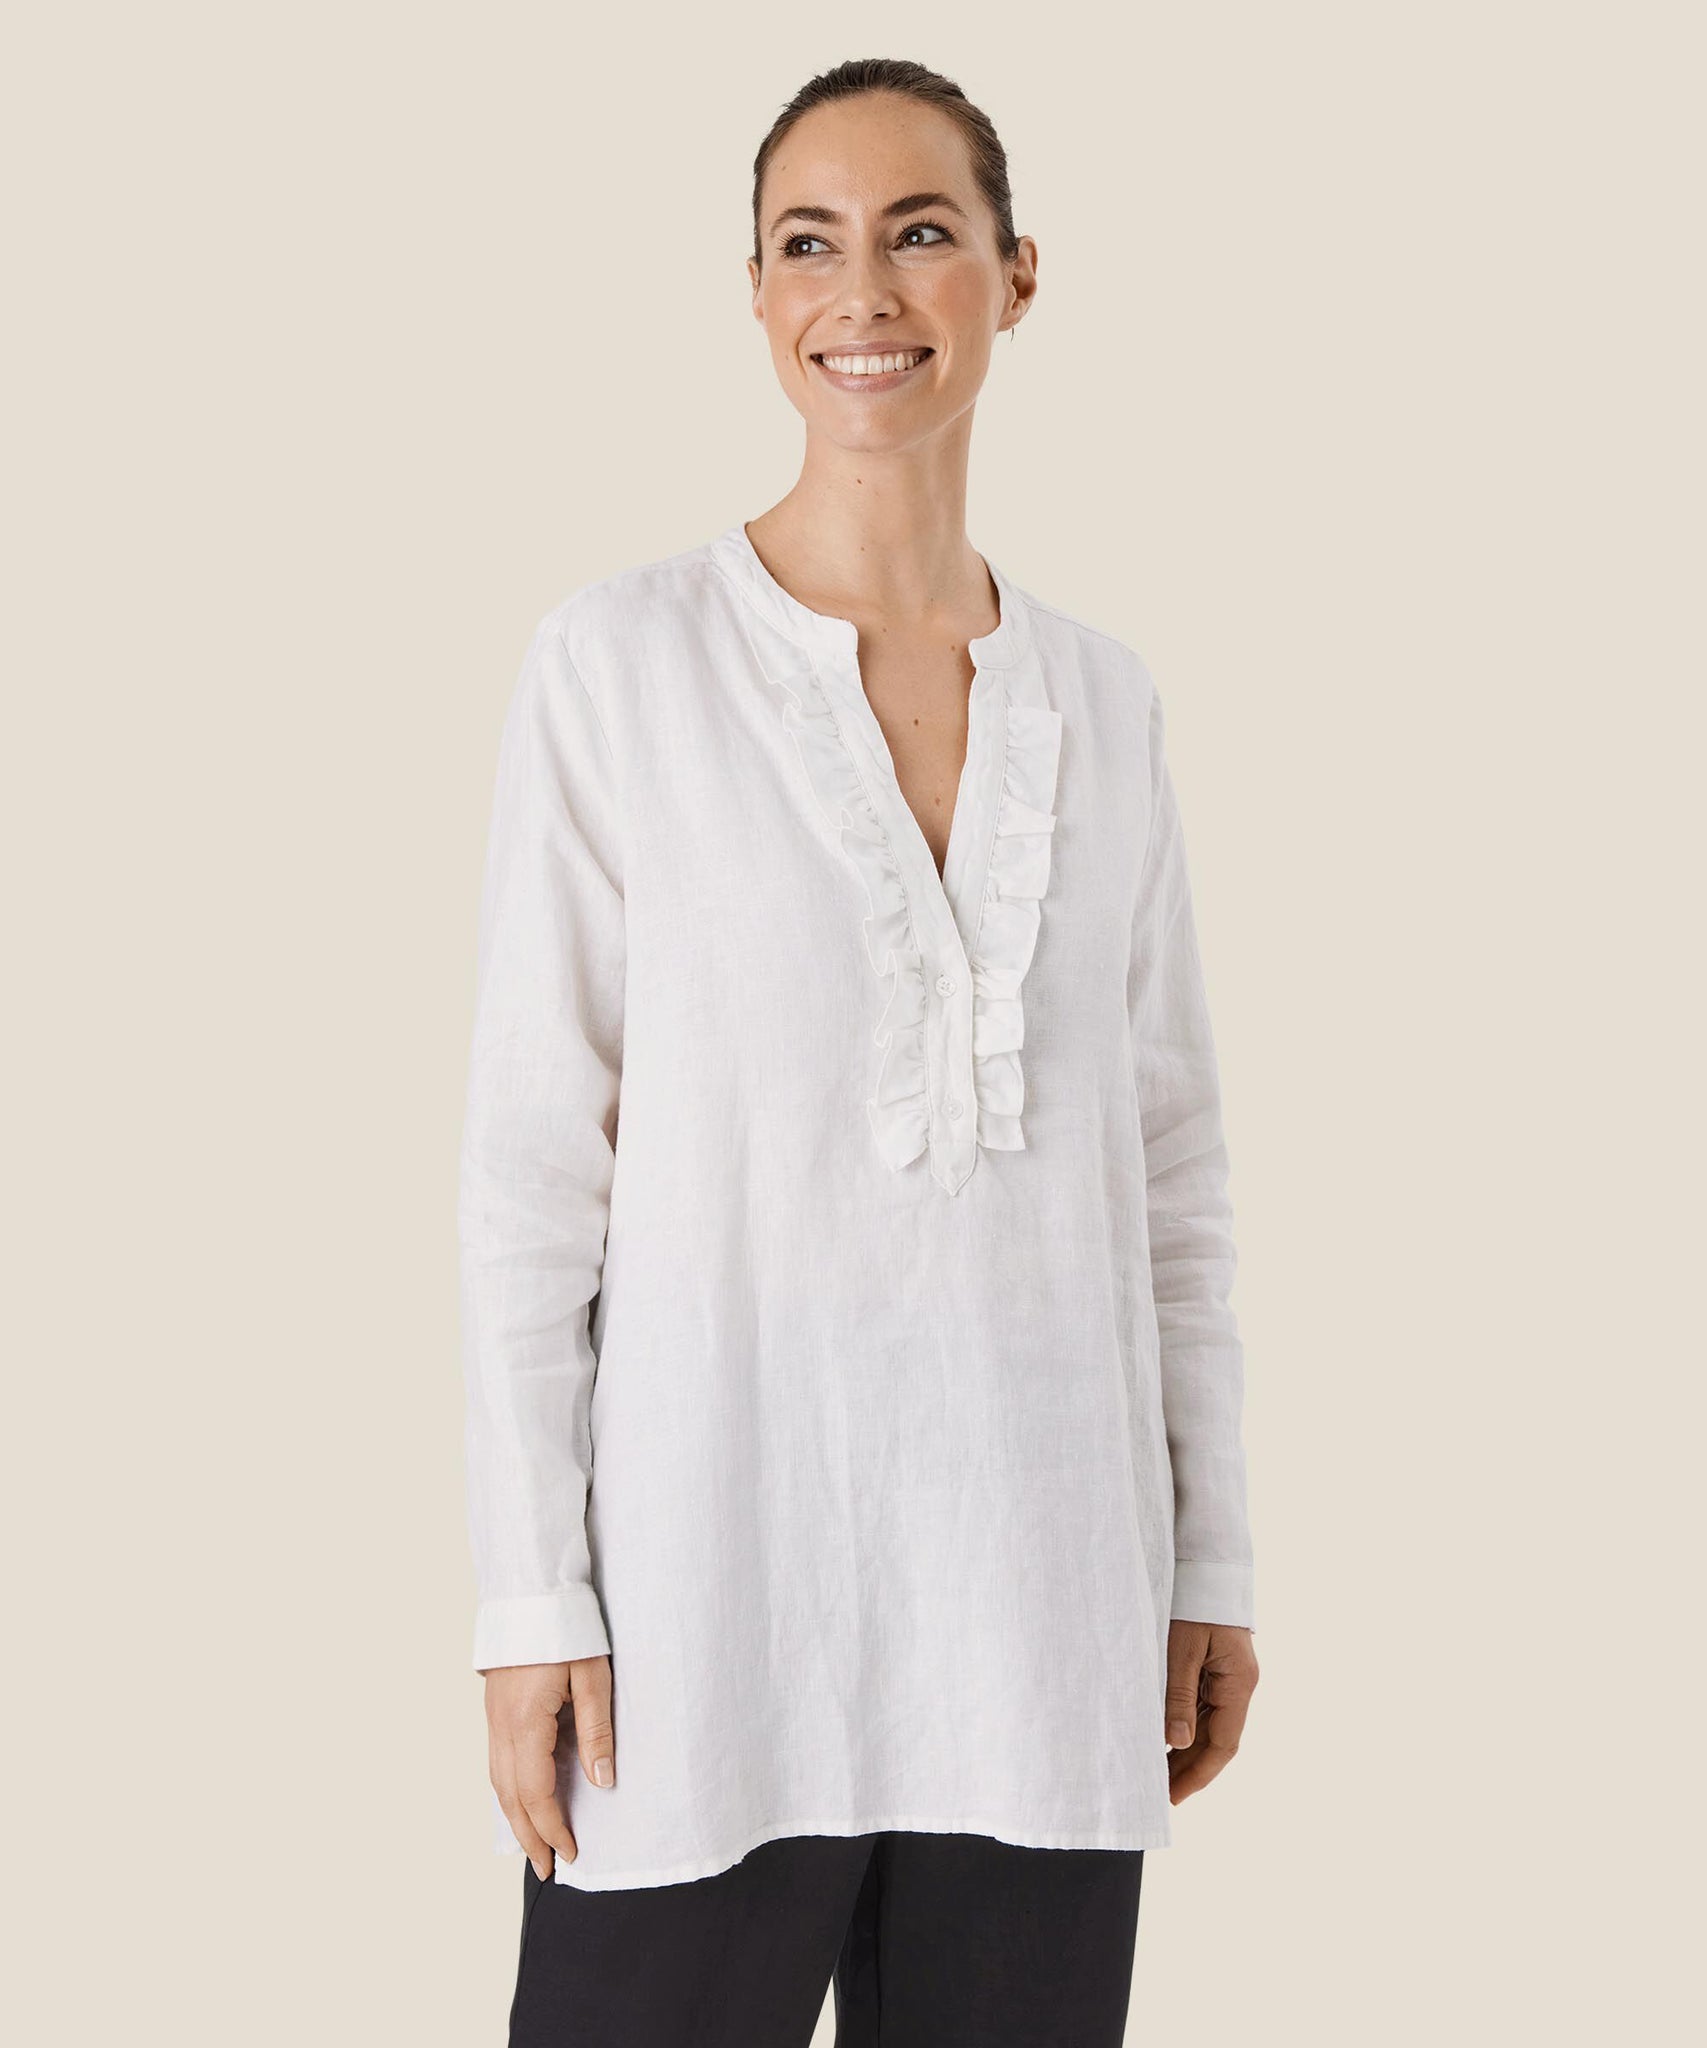 499813 Masai blouse lin blanche